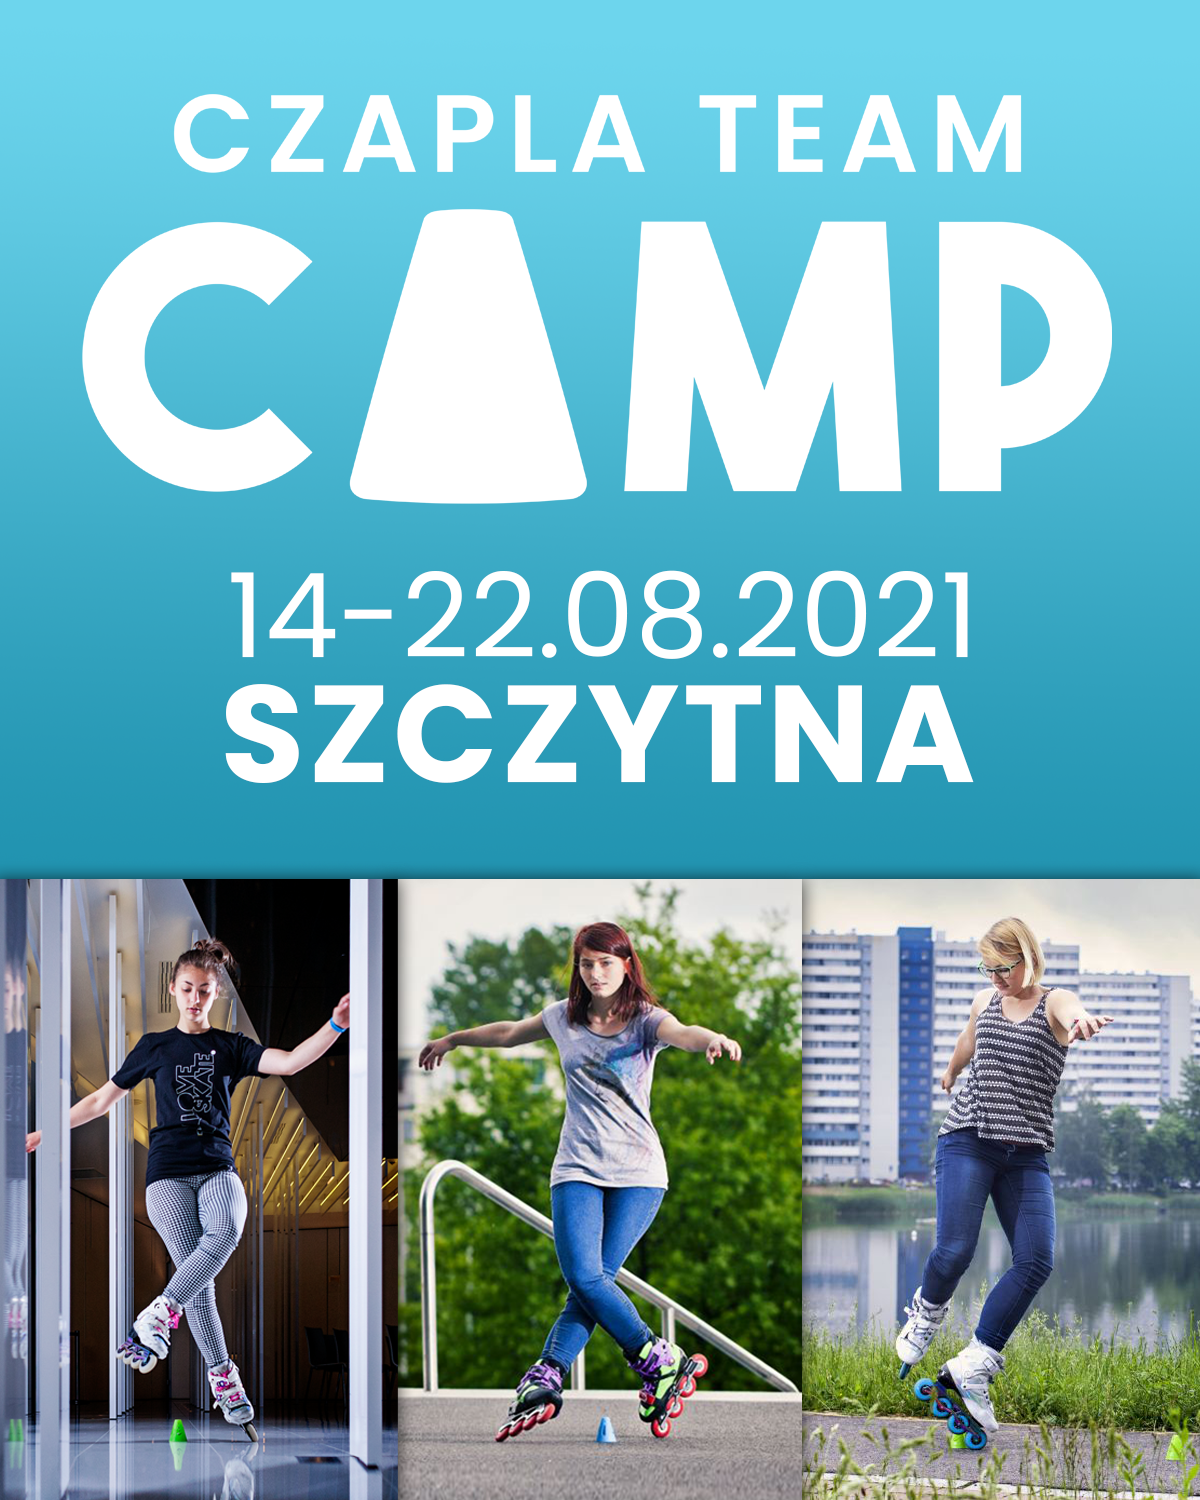 Czapla Team Camp